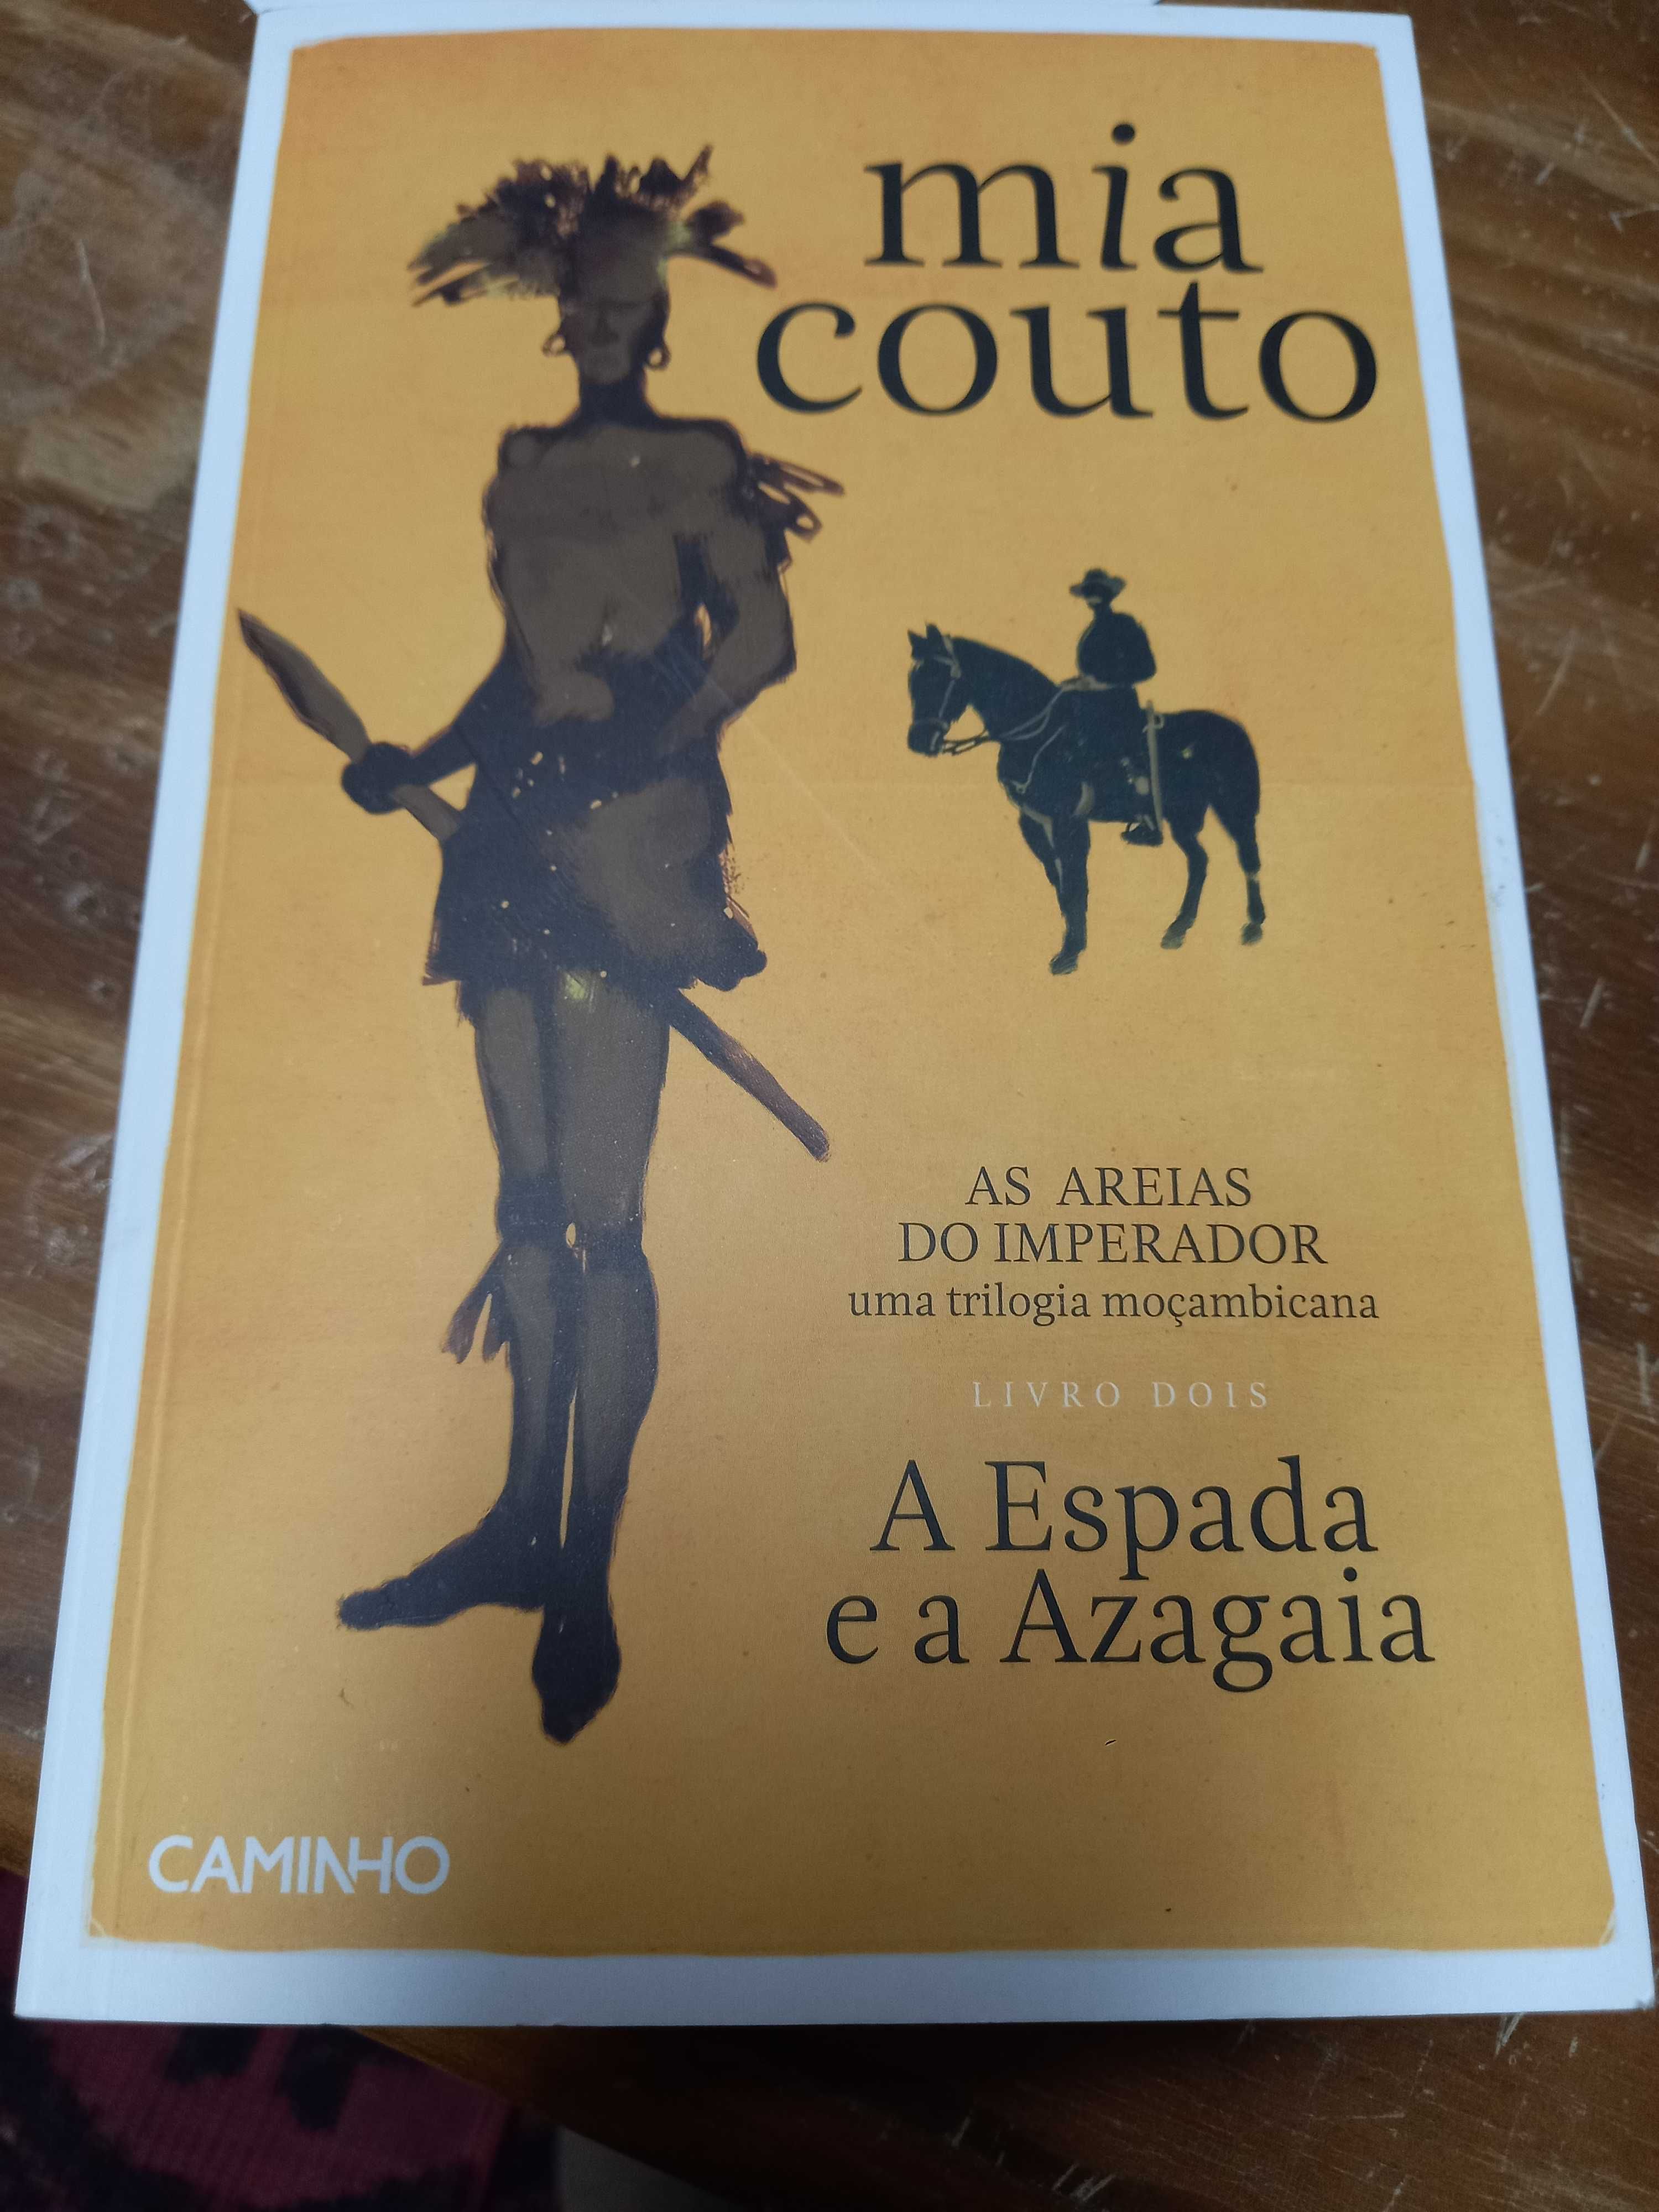 Livro: A Espada e a Azagaia - Mia Couto